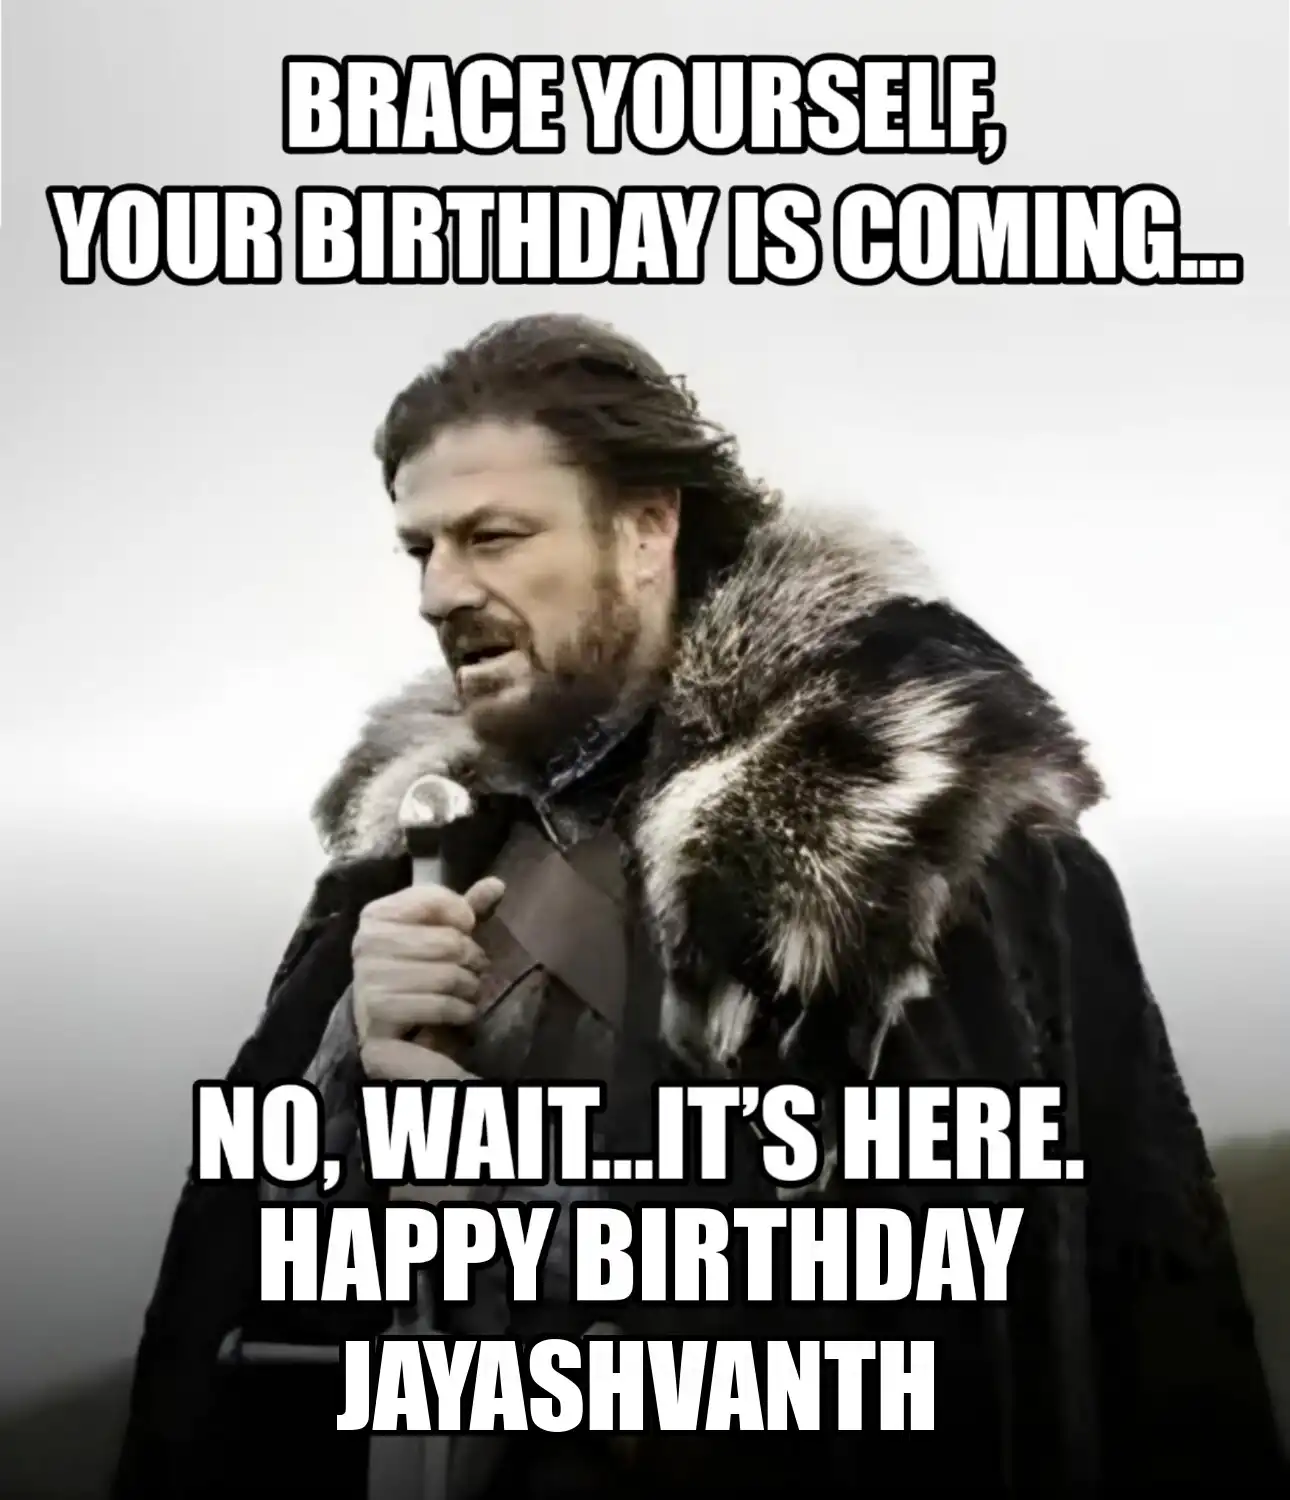 Happy Birthday Jayashvanth Brace Yourself Your Birthday Is Coming Meme